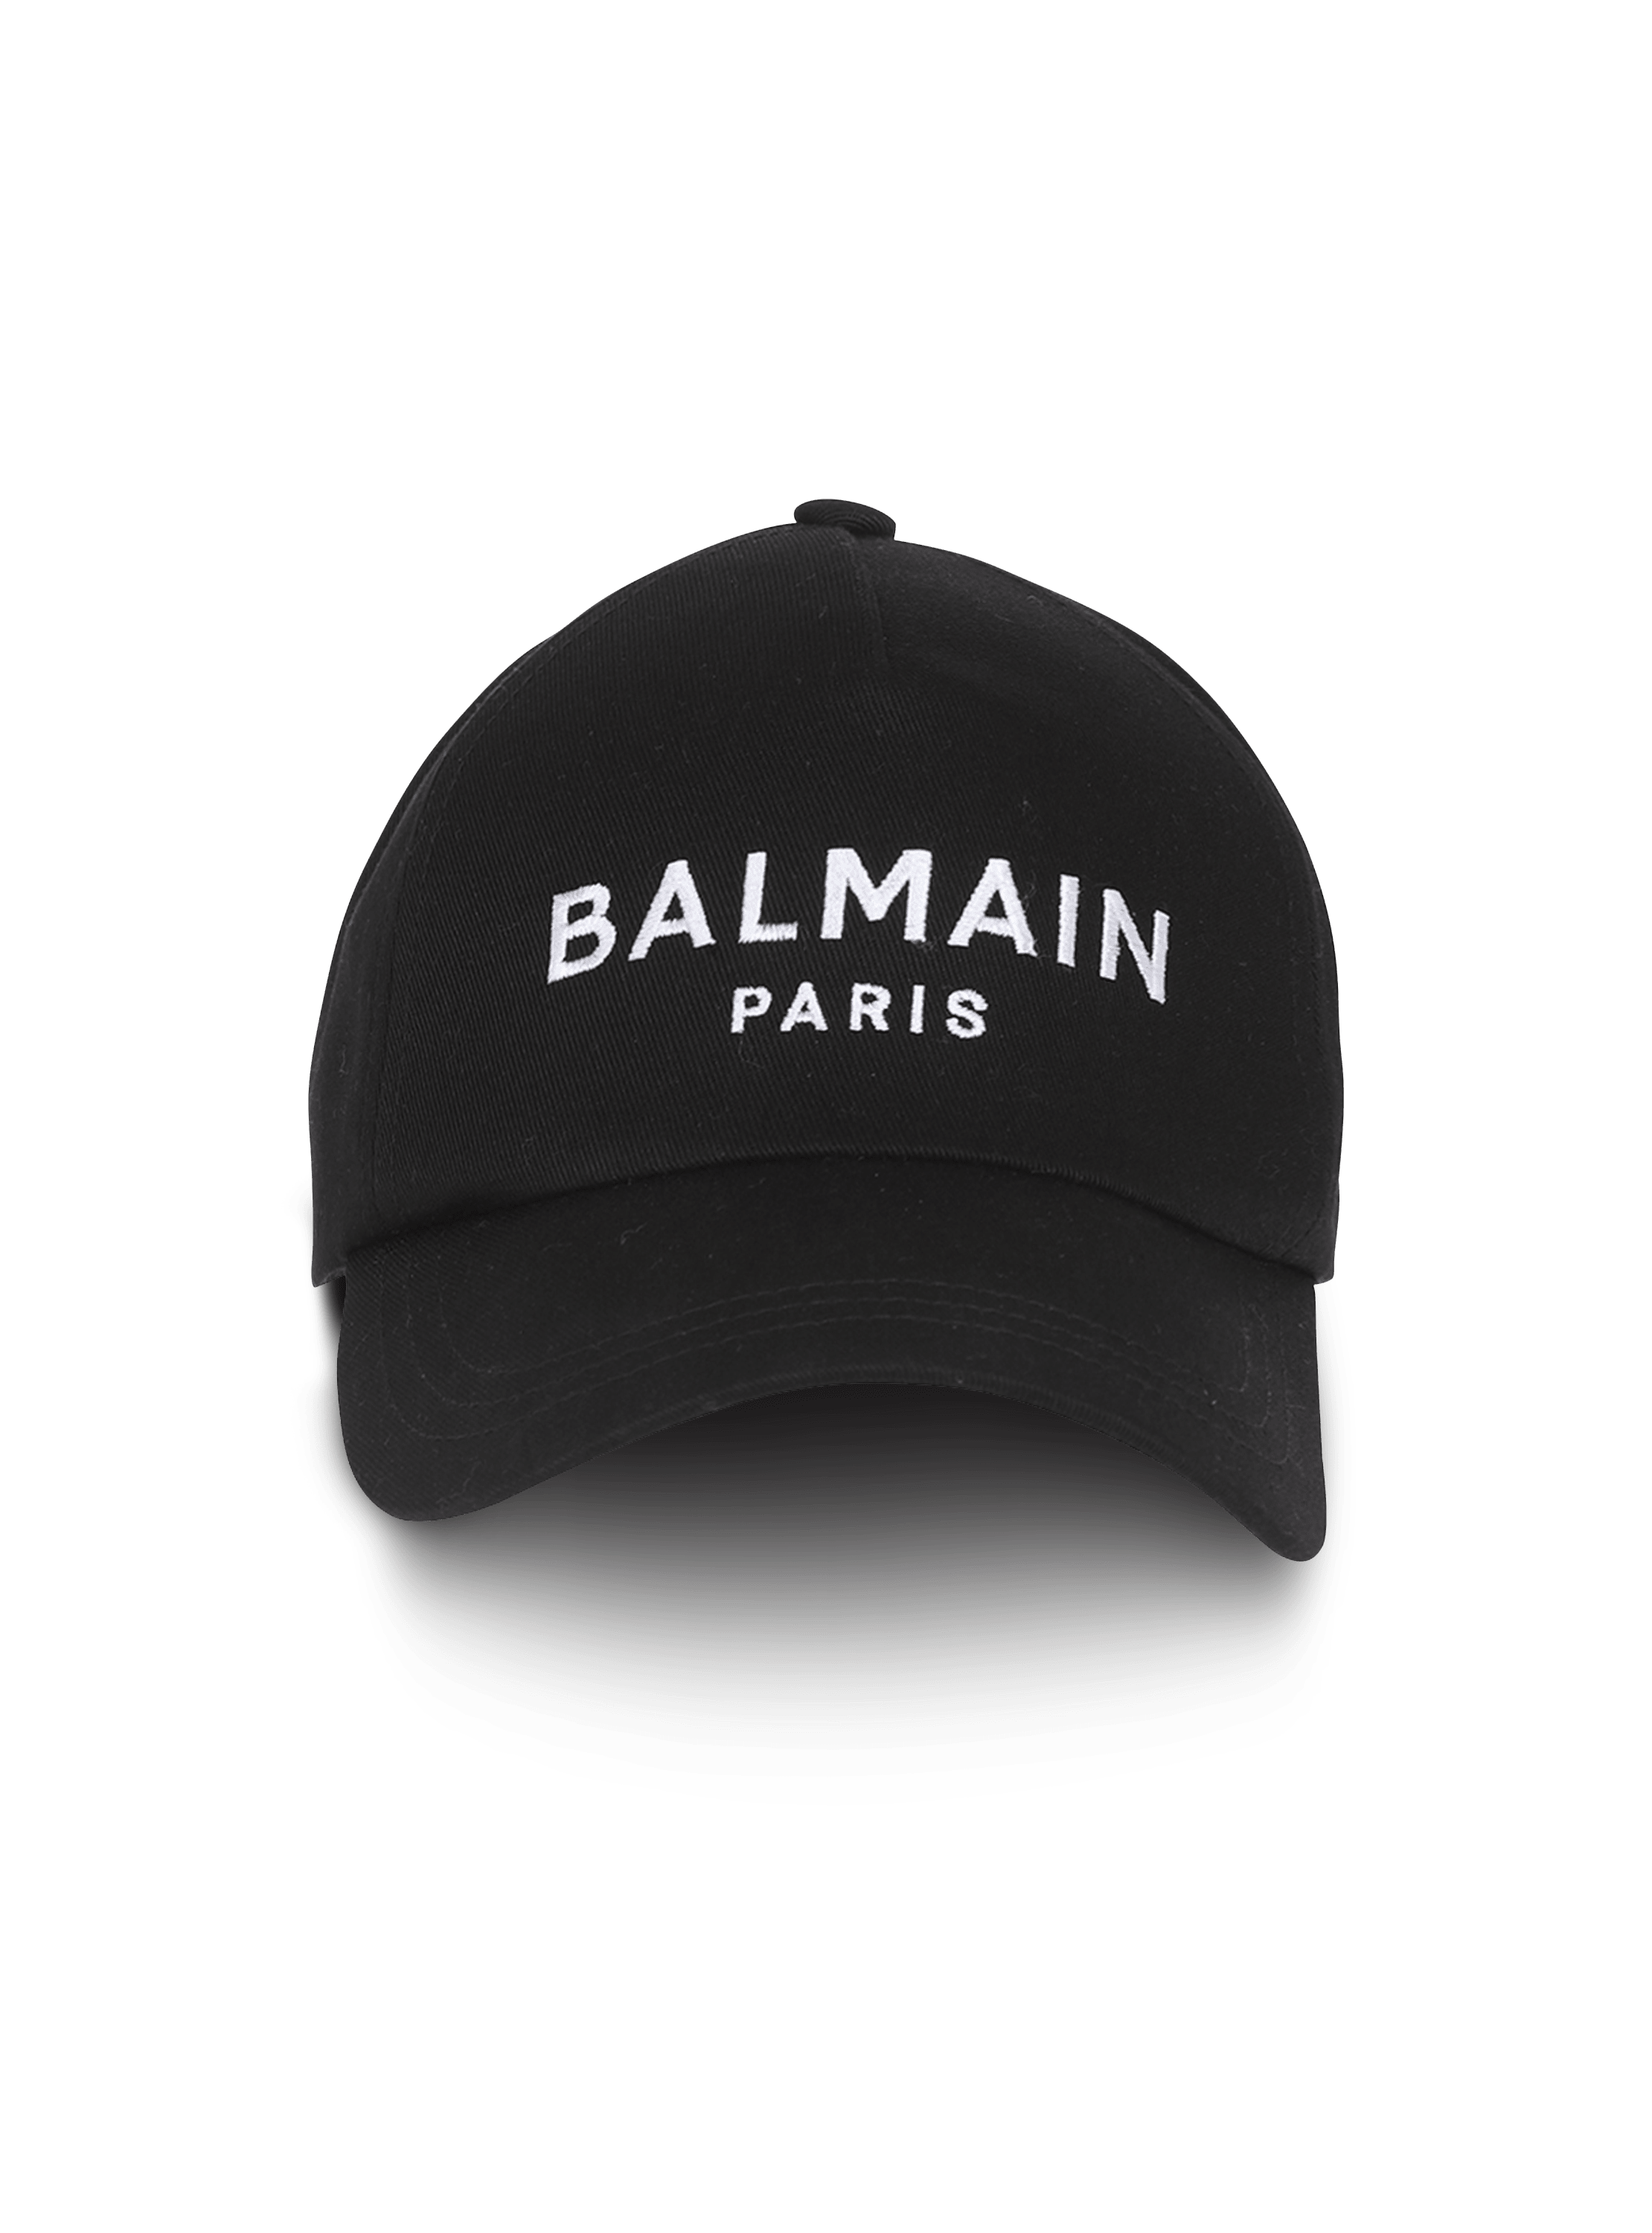 Balmain Paris エンブロイダリーキャップ